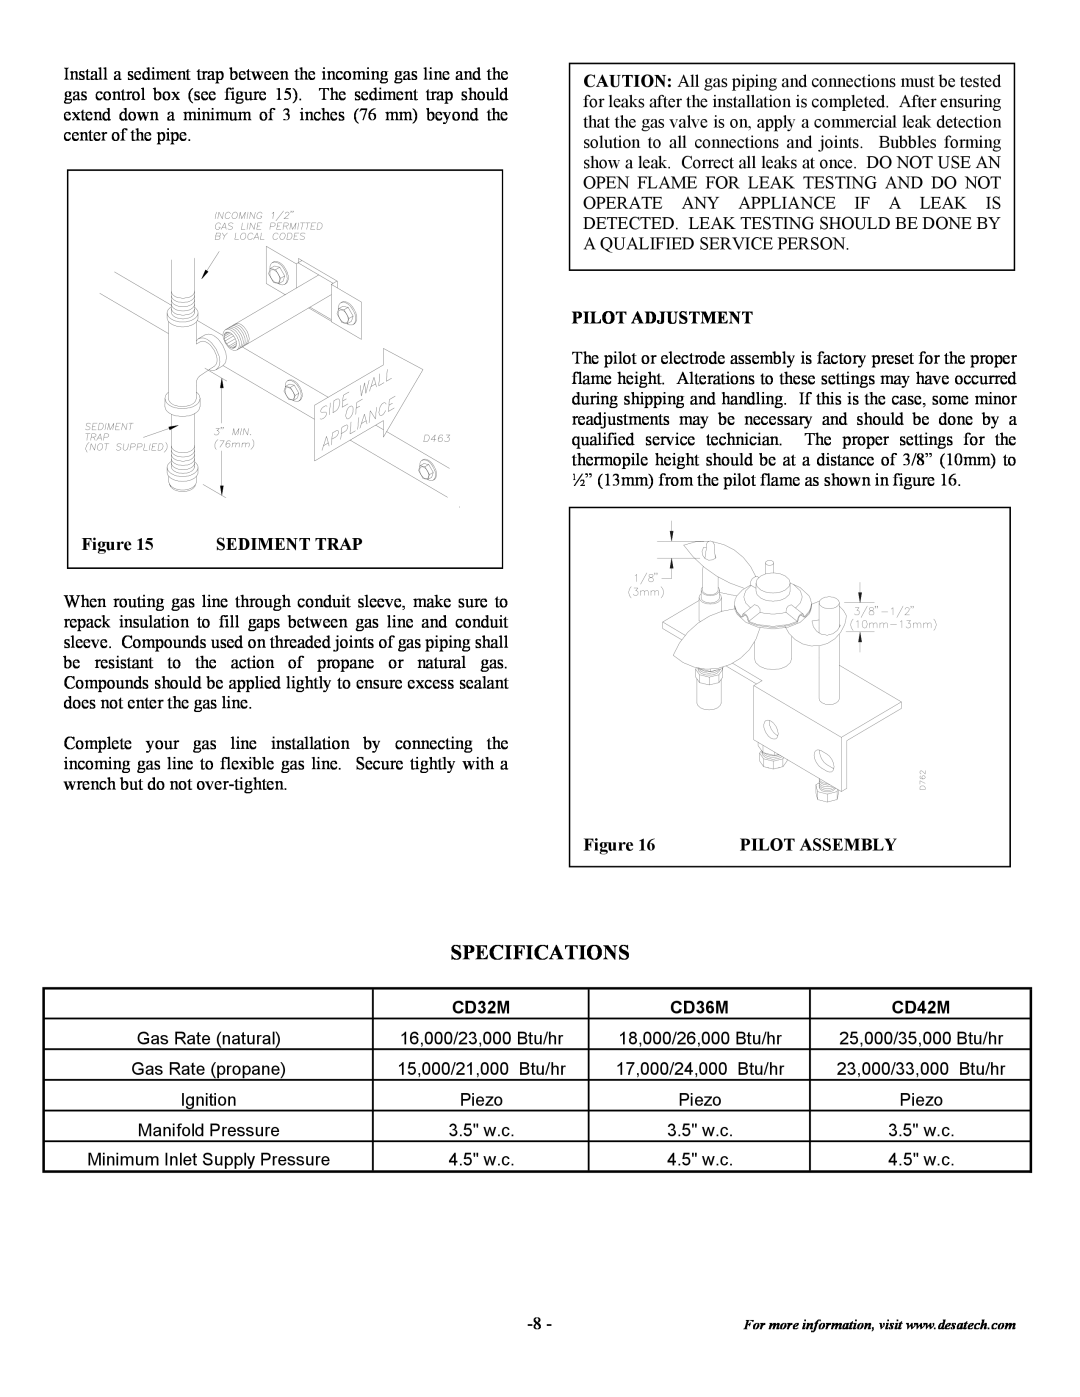 Desa CD32M(-1)(-2), CD36M(-1)(-2) Specifications, Sediment Trap, Pilot Adjustment, Pilot Assembly, CD42M 